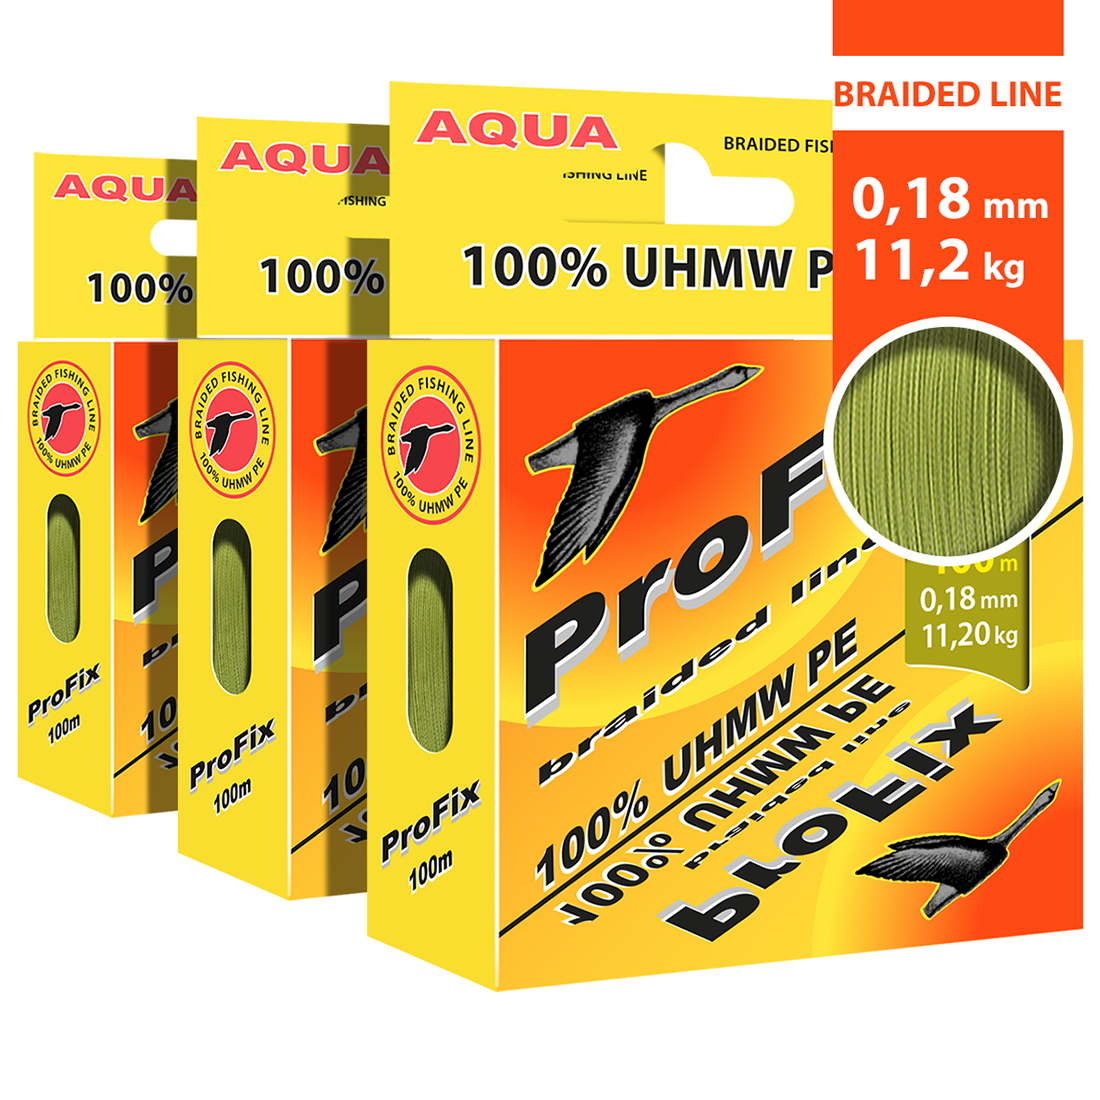 фото Плетеный шнур aqua profix olive 0,18mm 100m, оливковый, test - 11,20kg (набор 3 шт)